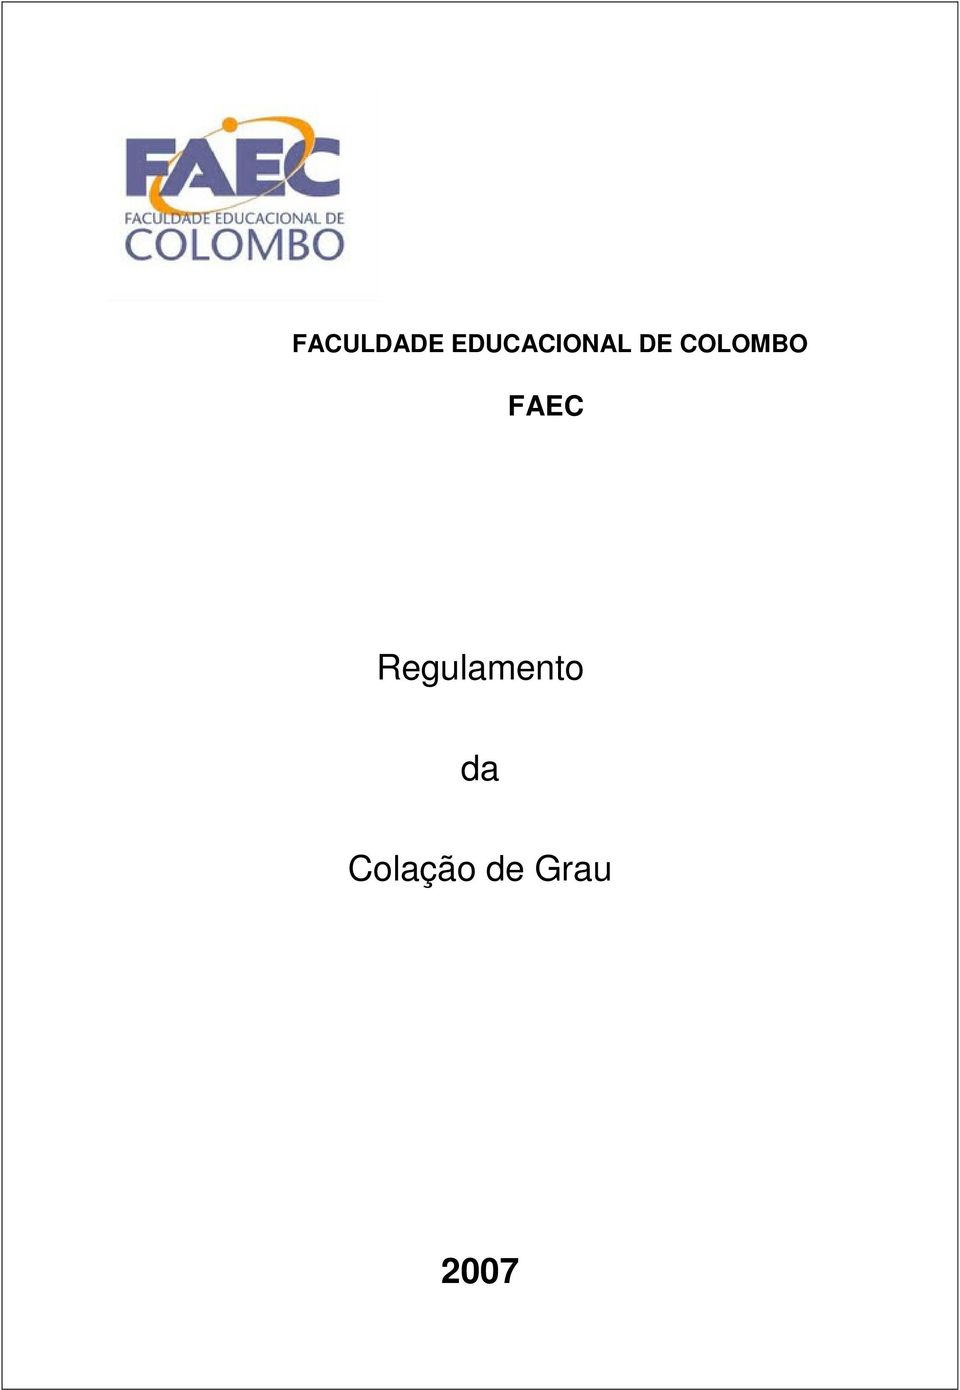 COLOMBO FAEC